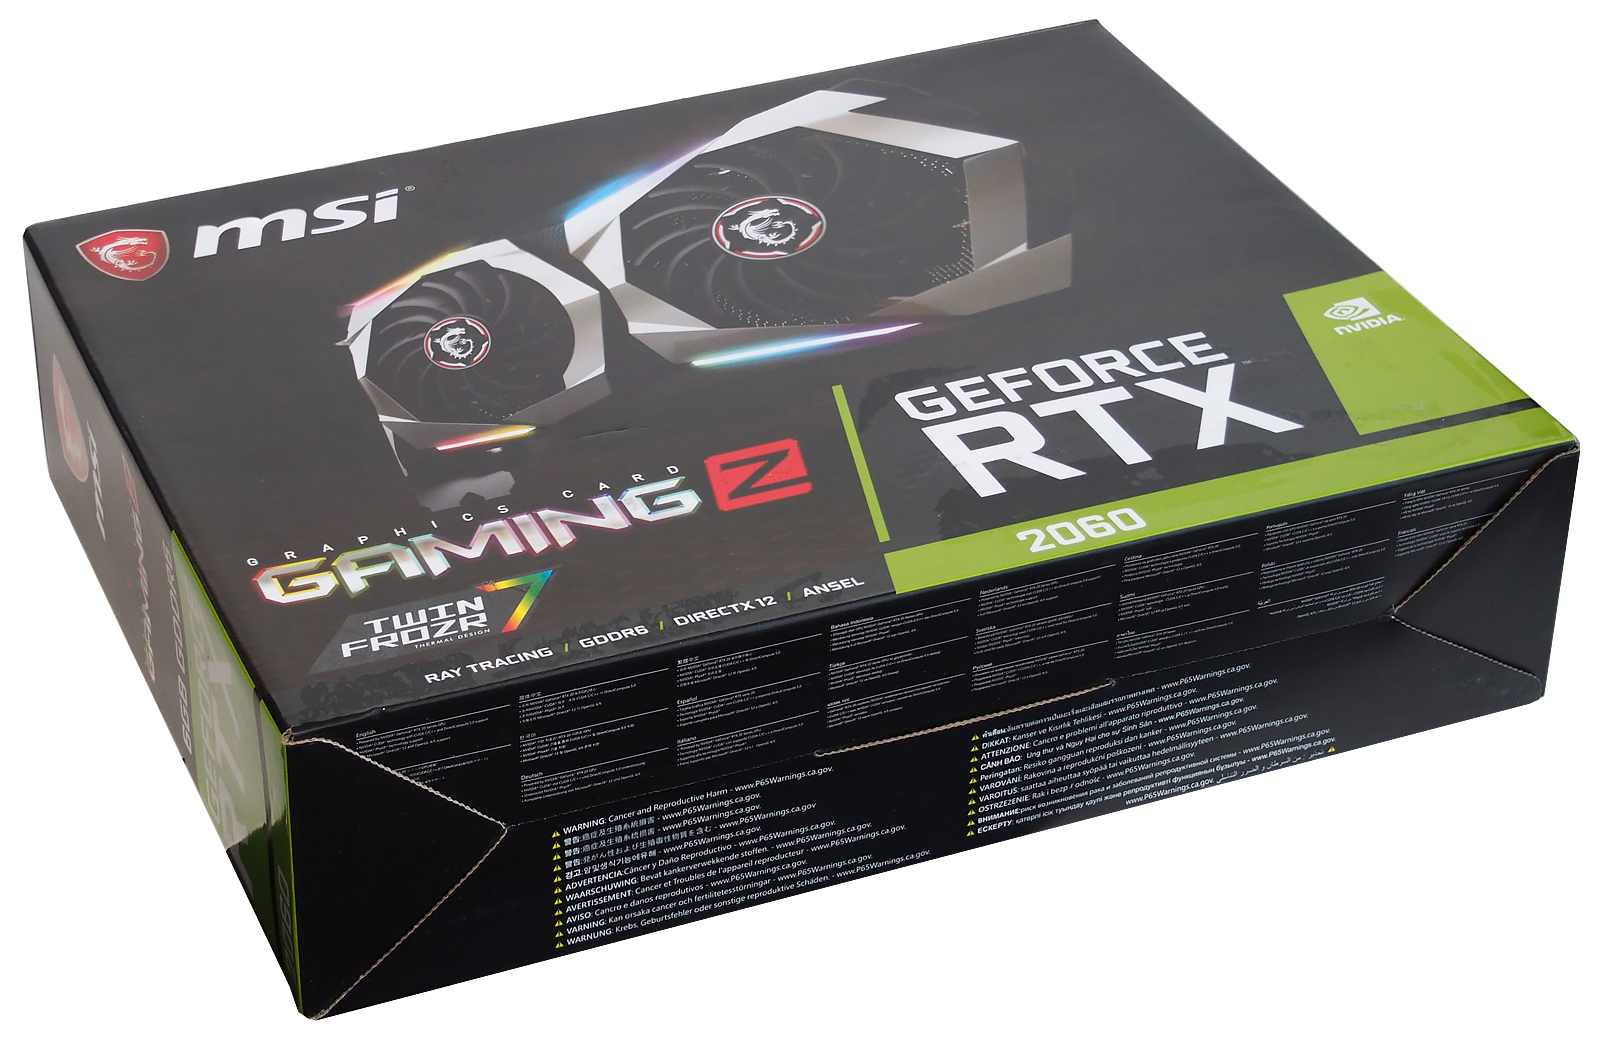 GEFORCE RTX 2060 Gaming z 6g. RTX 2060 MSI Gaming z. Коробка от MSI RTX 2060. Видеокарта РТХ 2060 МСИ упаковка.